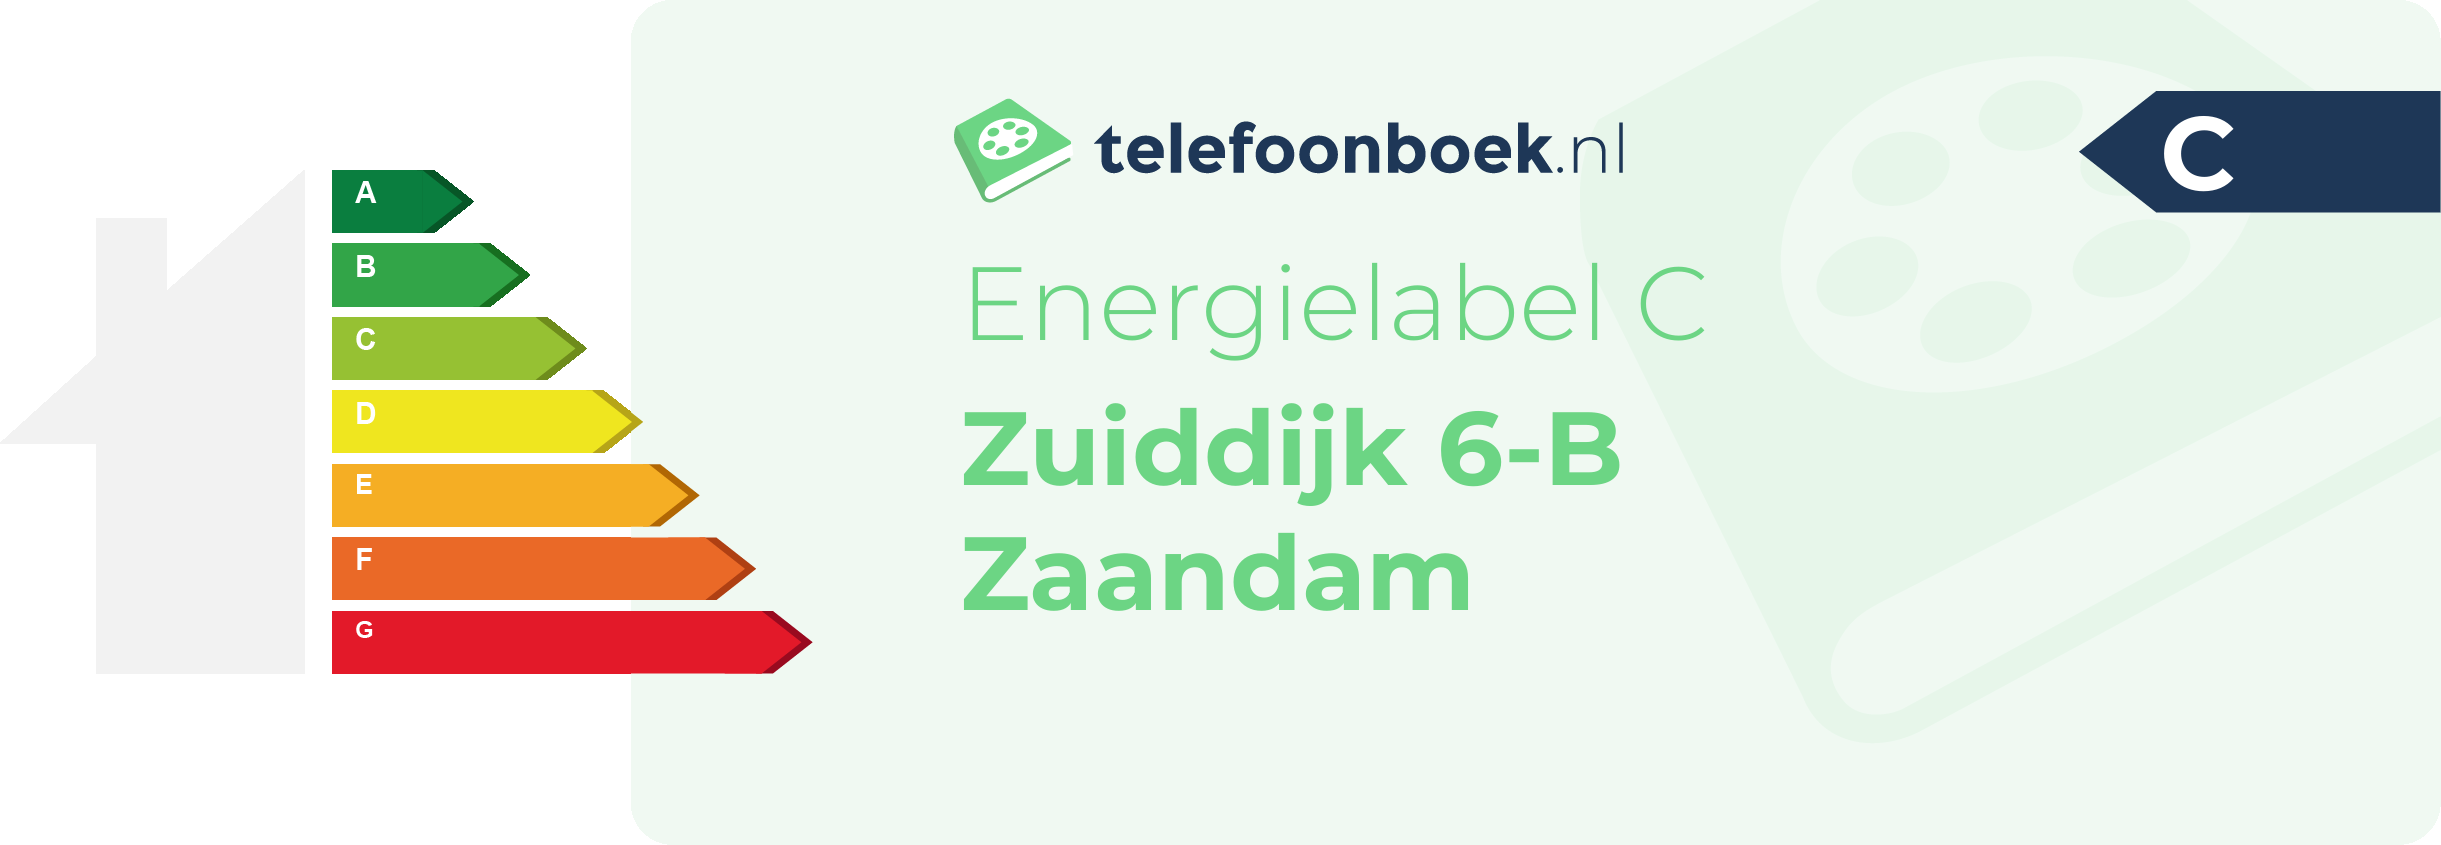 Energielabel Zuiddijk 6-B Zaandam